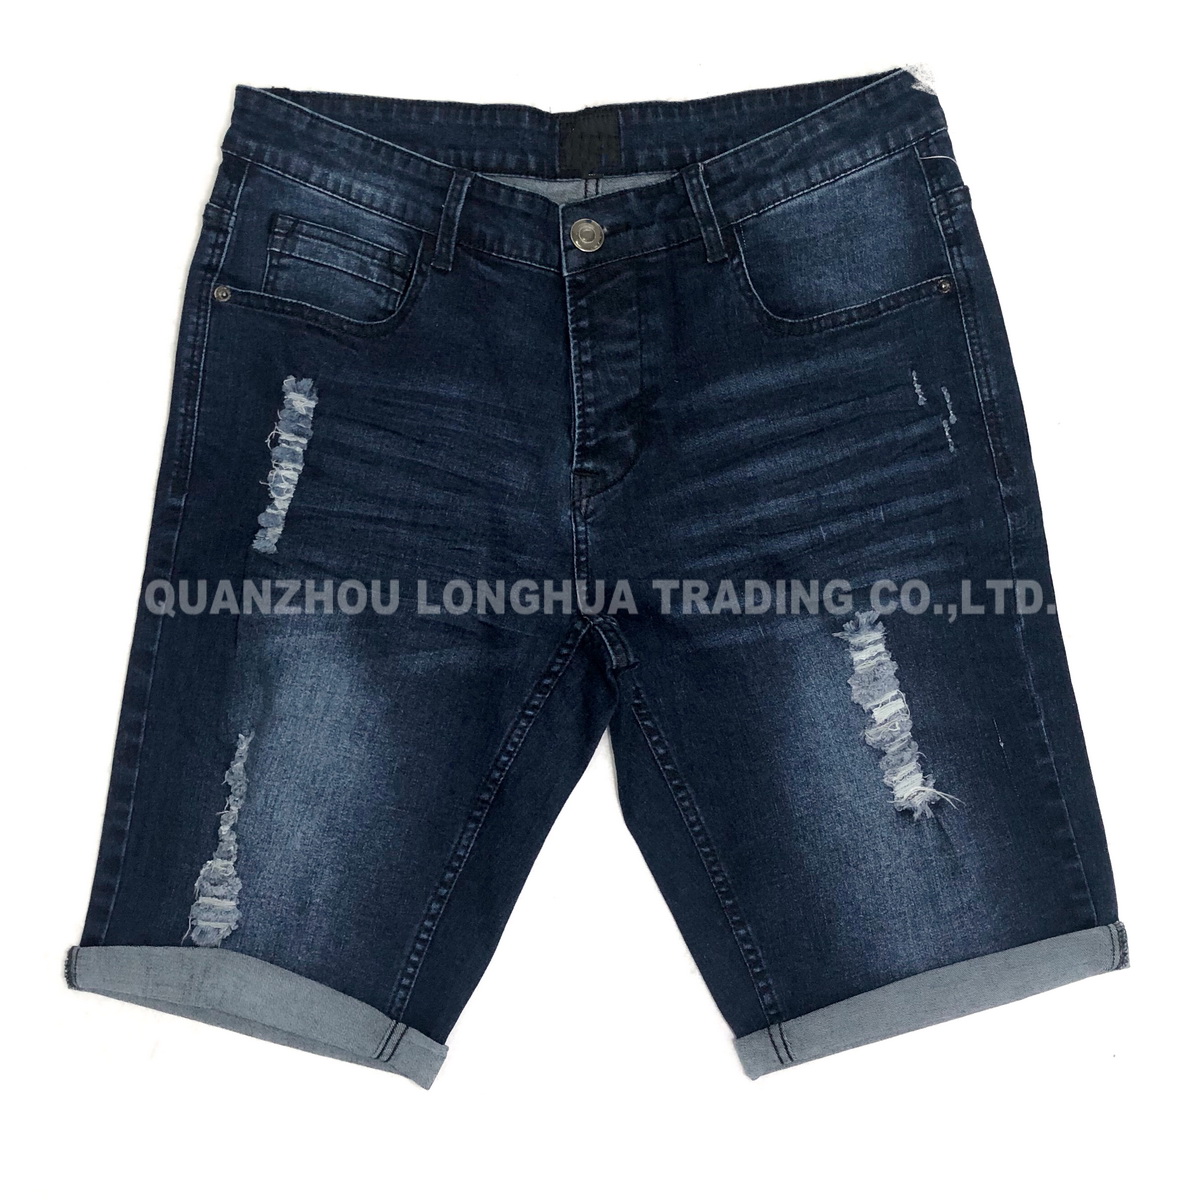 Men and Boys Denim Shorts Jeans Apparel Trouser Kids Wear Fashion Cotton Spandex Hole